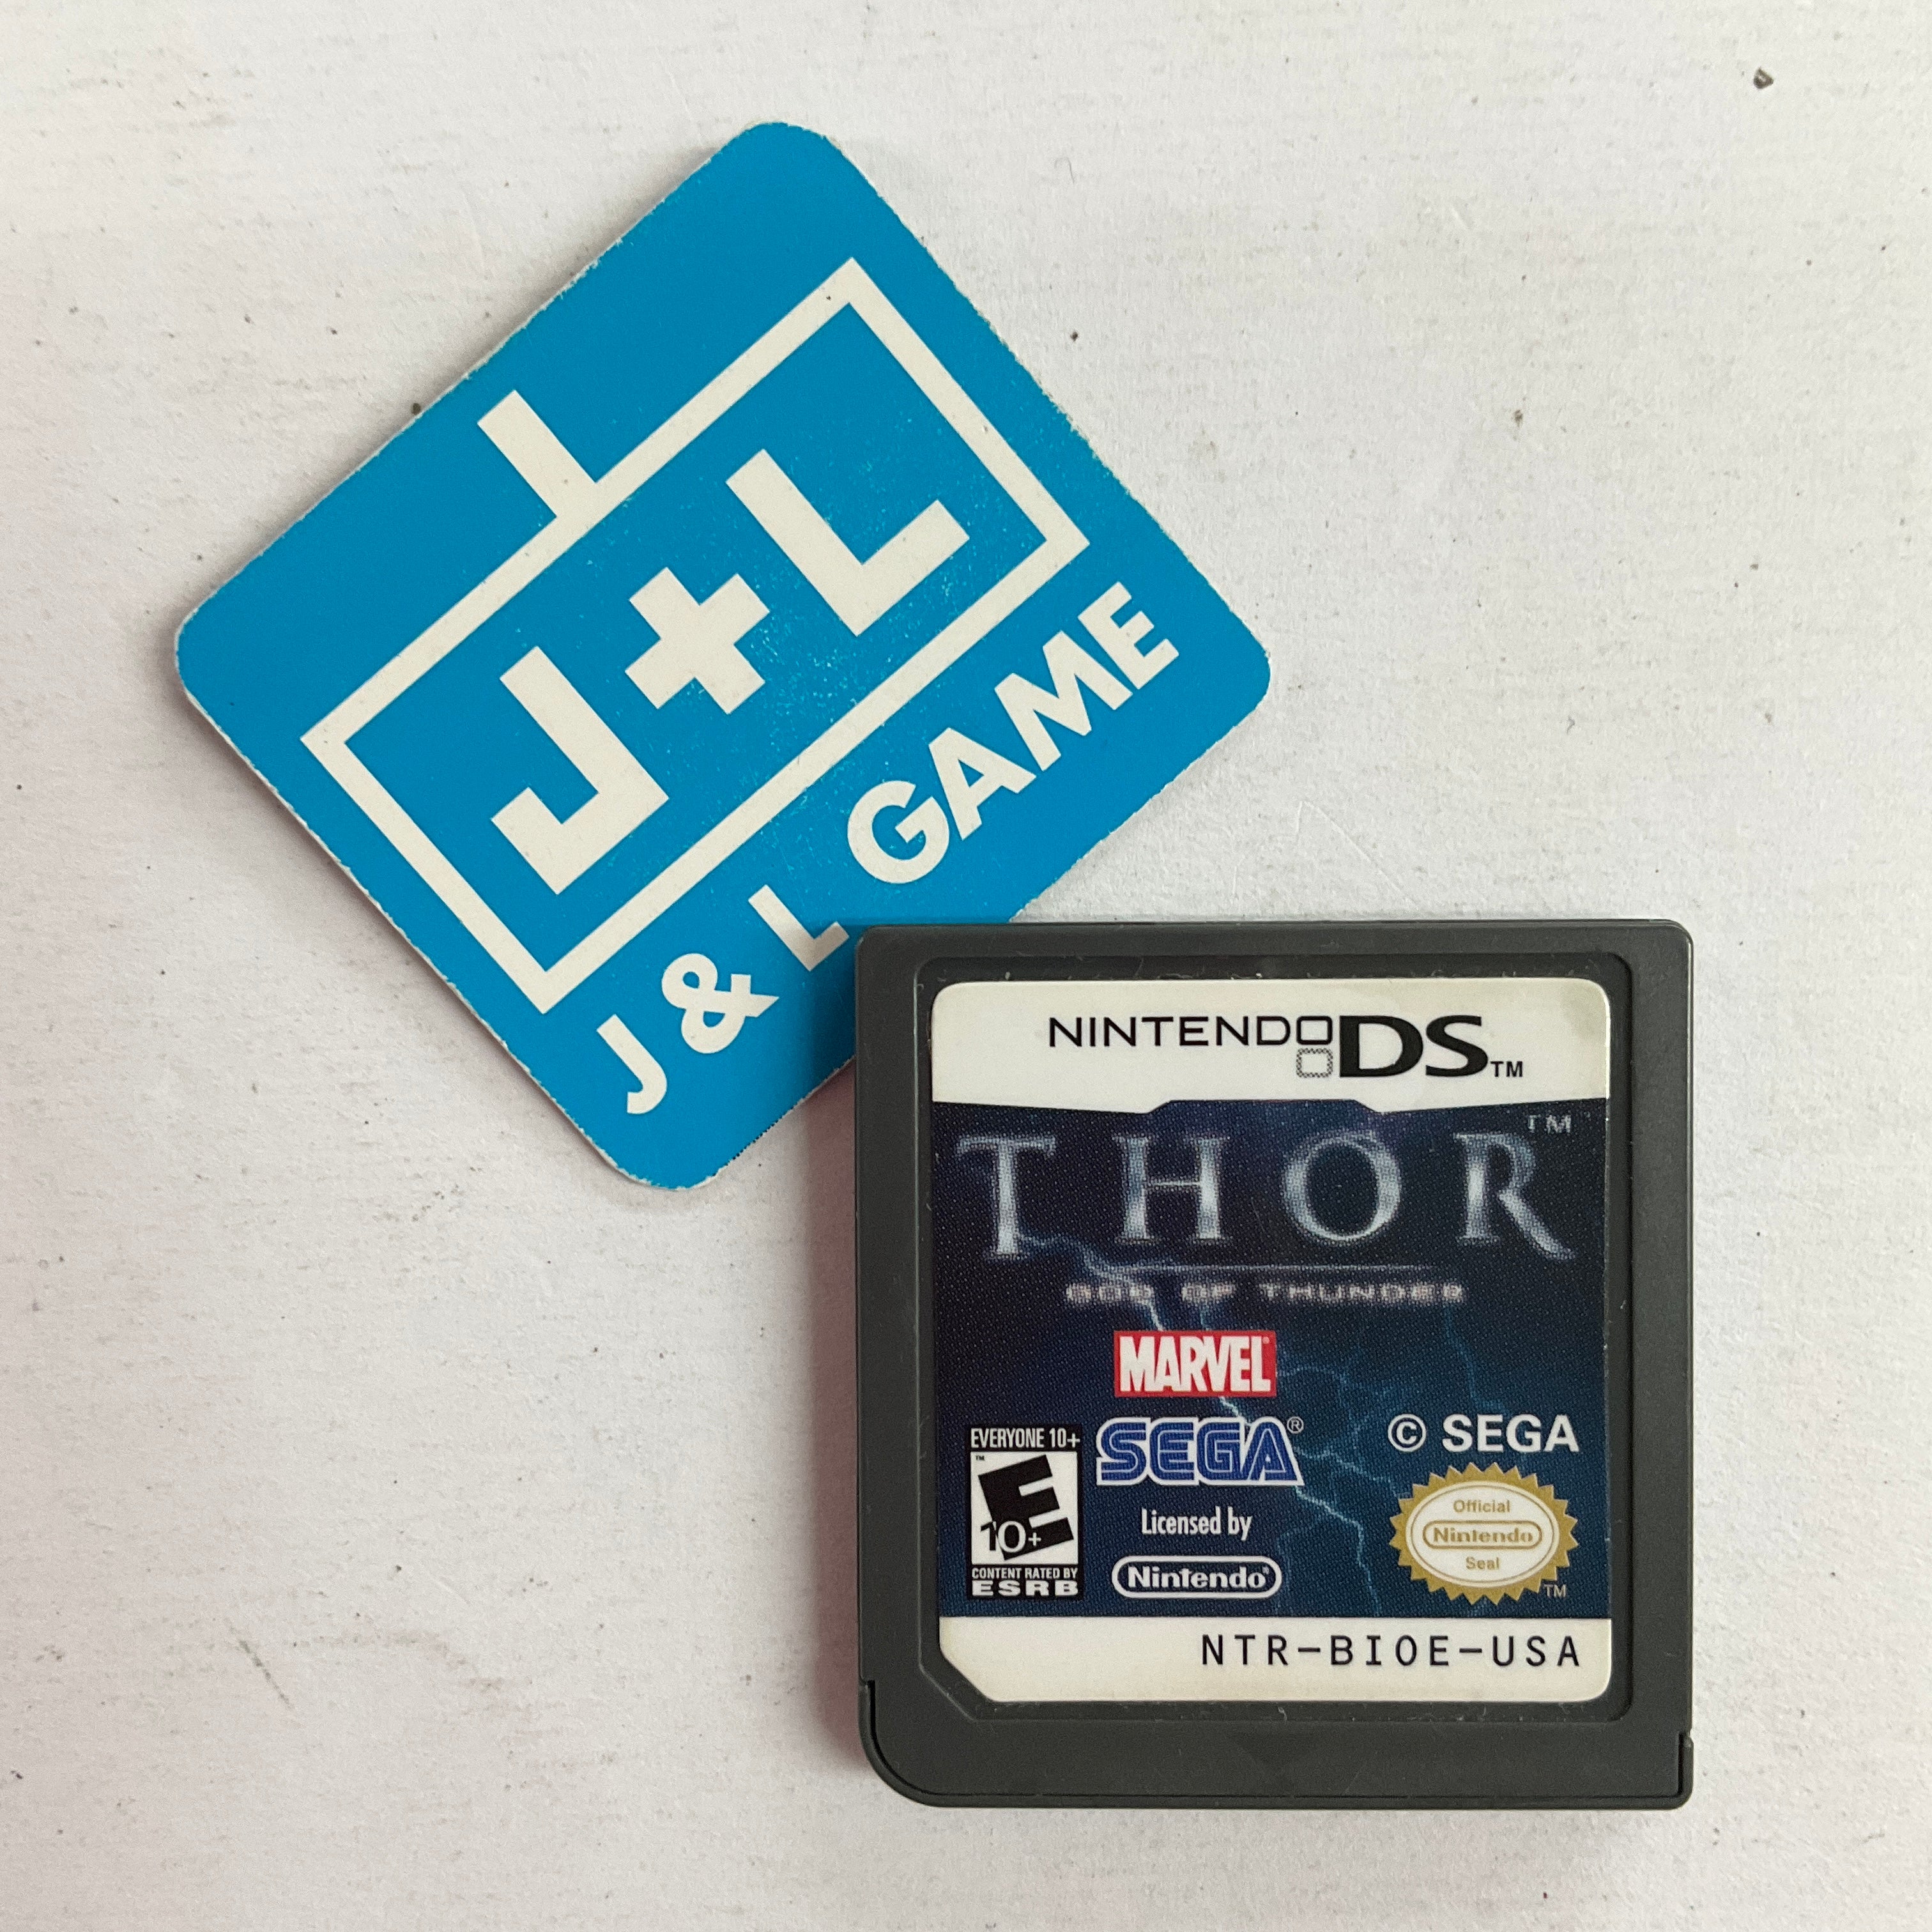 Thor: God of Thunder - (NDS) Nintendo DS [Pre-Owned] Video Games Sega   